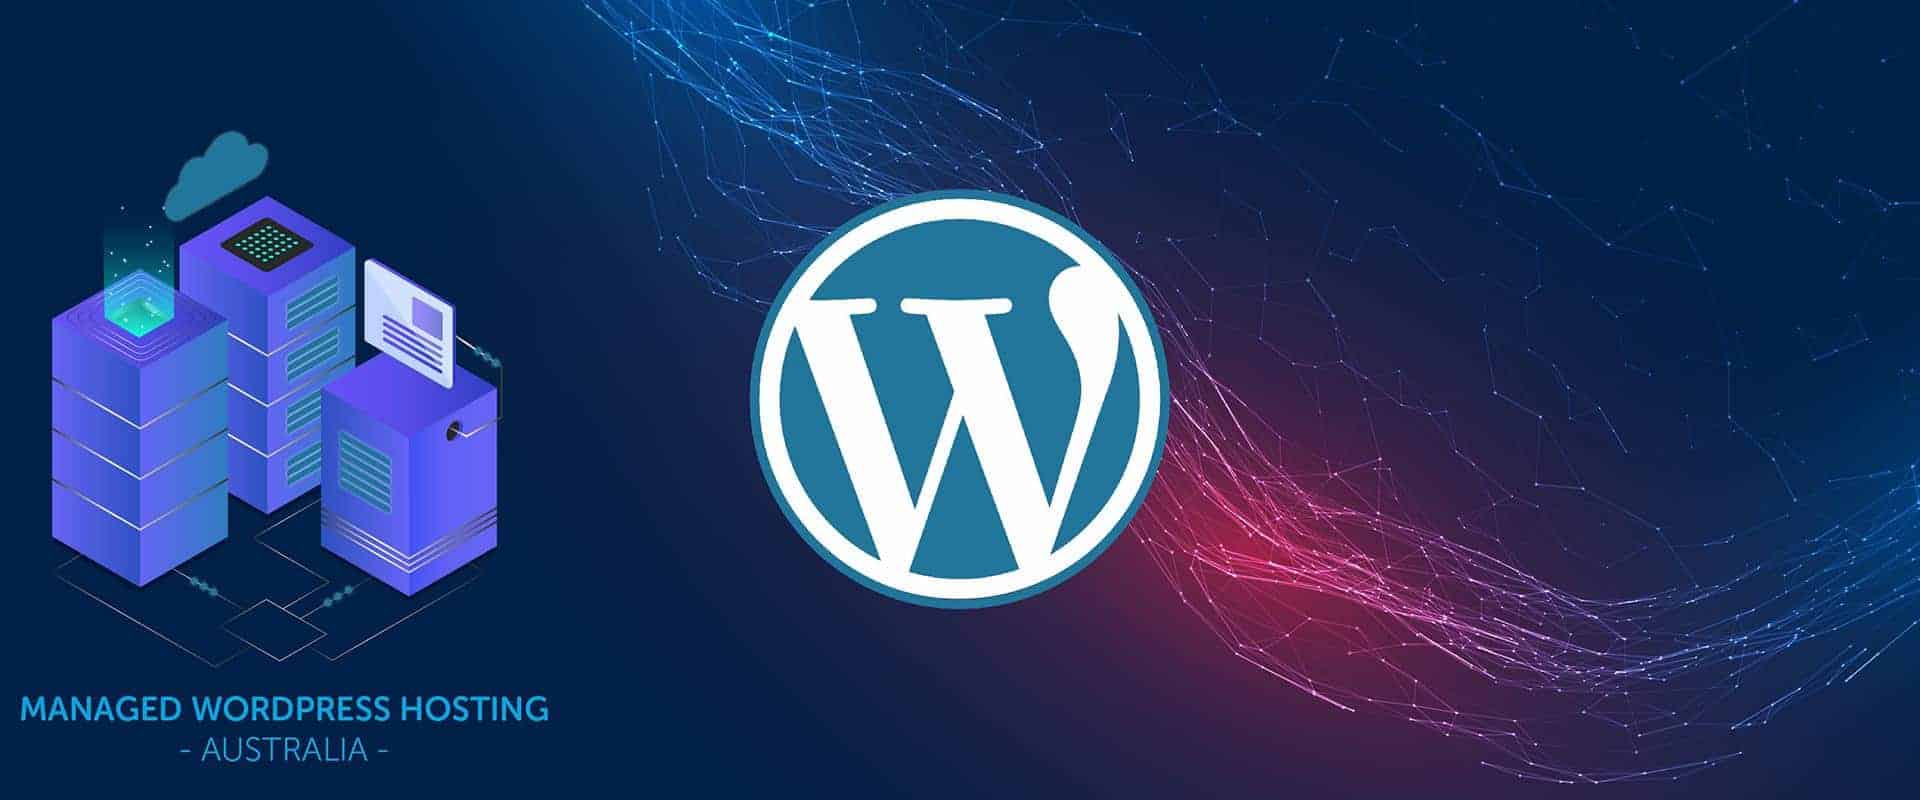 wordpress managed hosting in Australia